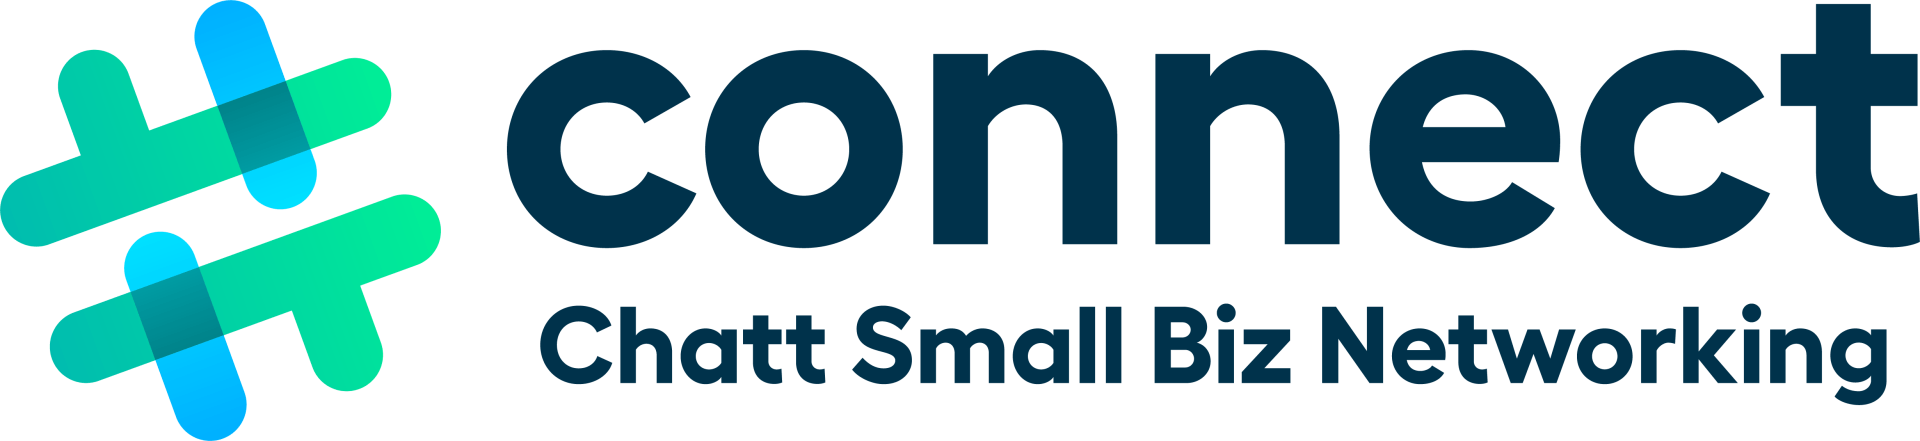 chatt small business networking logo